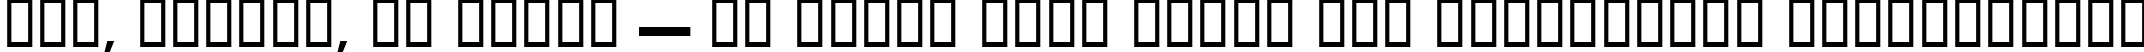 Пример написания шрифтом Aharoni Bold текста на украинском